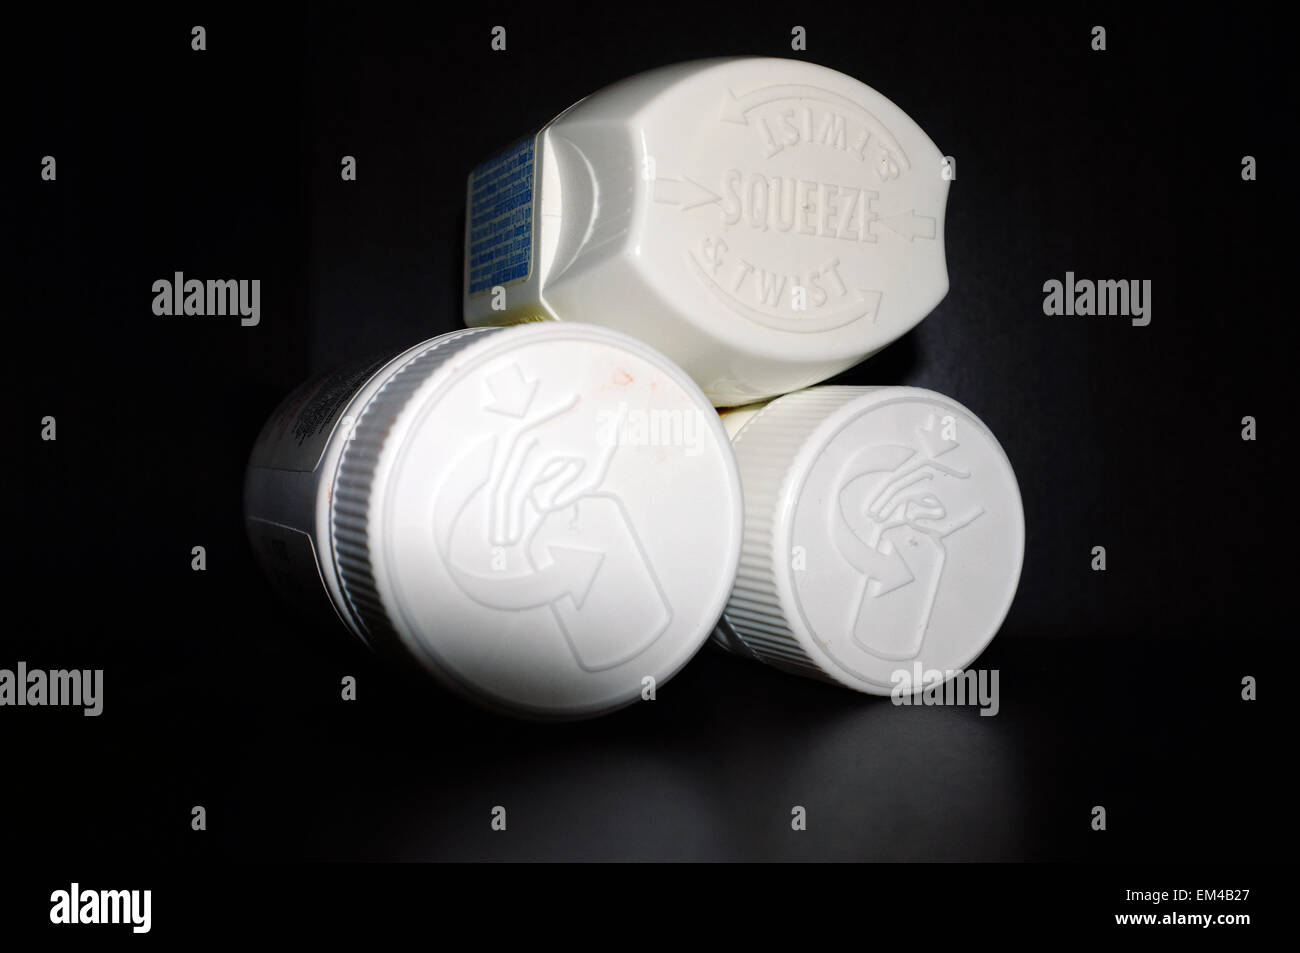 https://c8.alamy.com/comp/EM4B27/child-proof-packaging-on-the-lids-of-pill-bottles-photographed-against-EM4B27.jpg